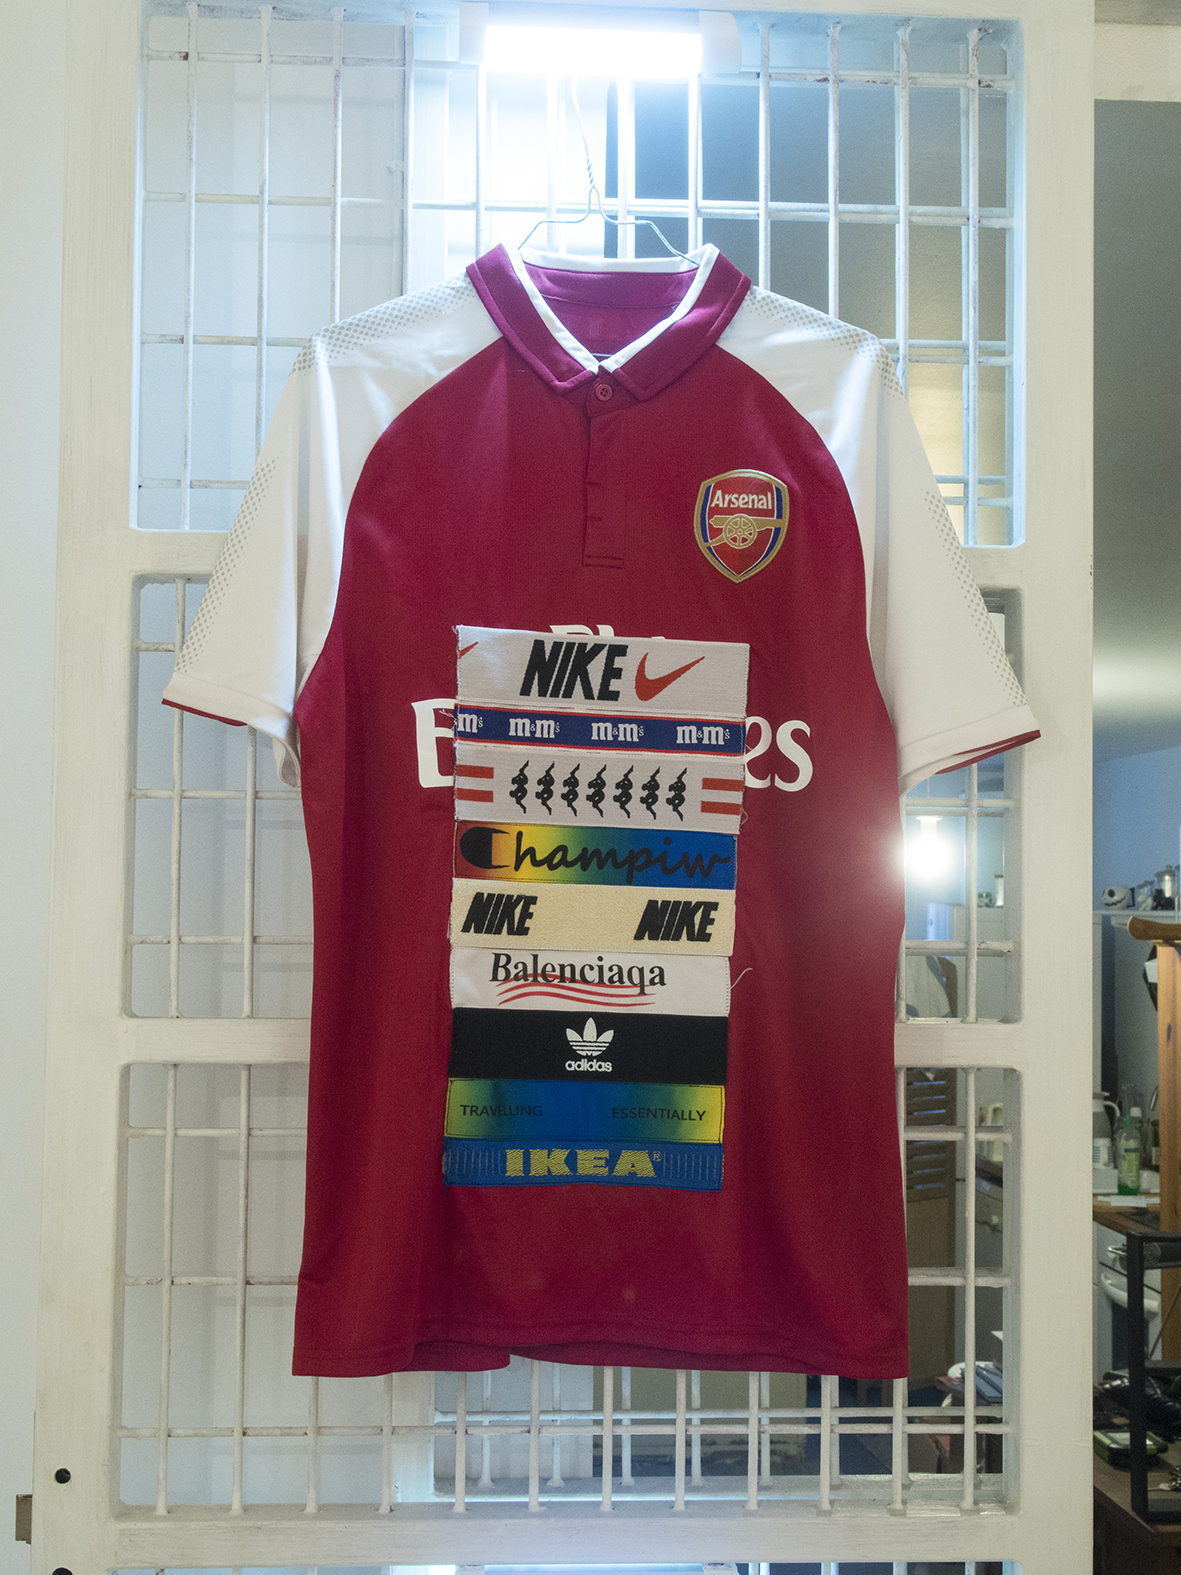 Alexandre Bavard, Soccer jersey Arsenal (2018) Soccer singlet, fake printed brands, 78 x 54 cm